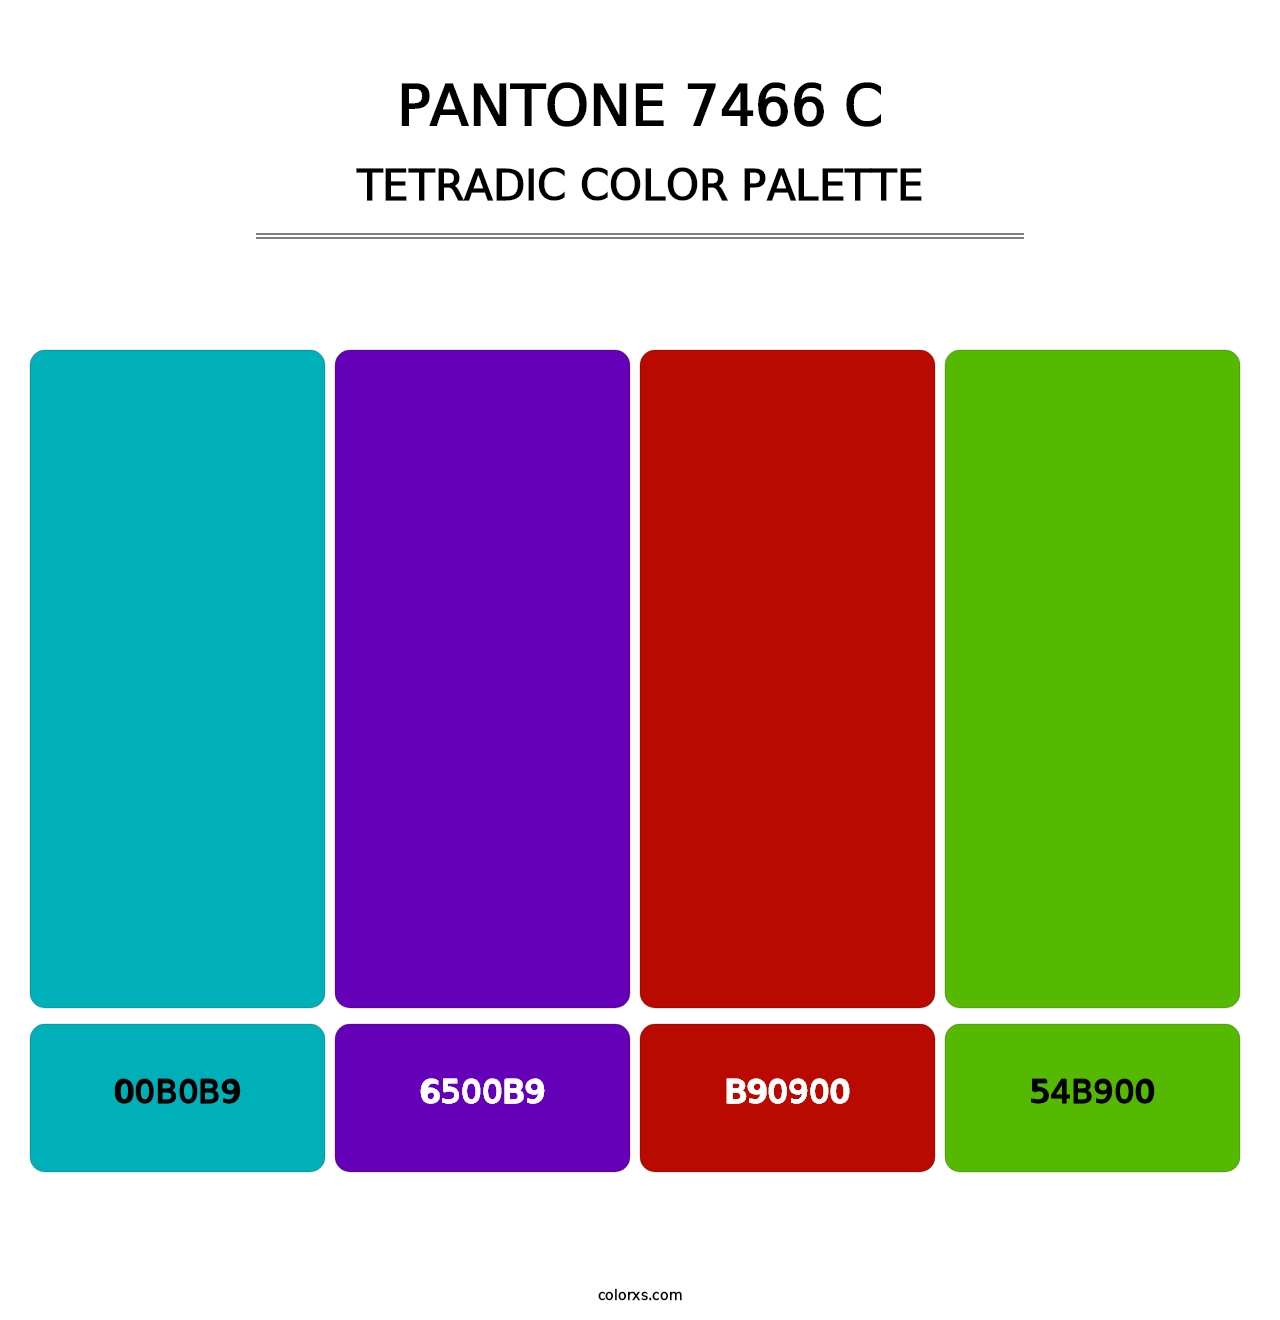 PANTONE 7466 C - Tetradic Color Palette